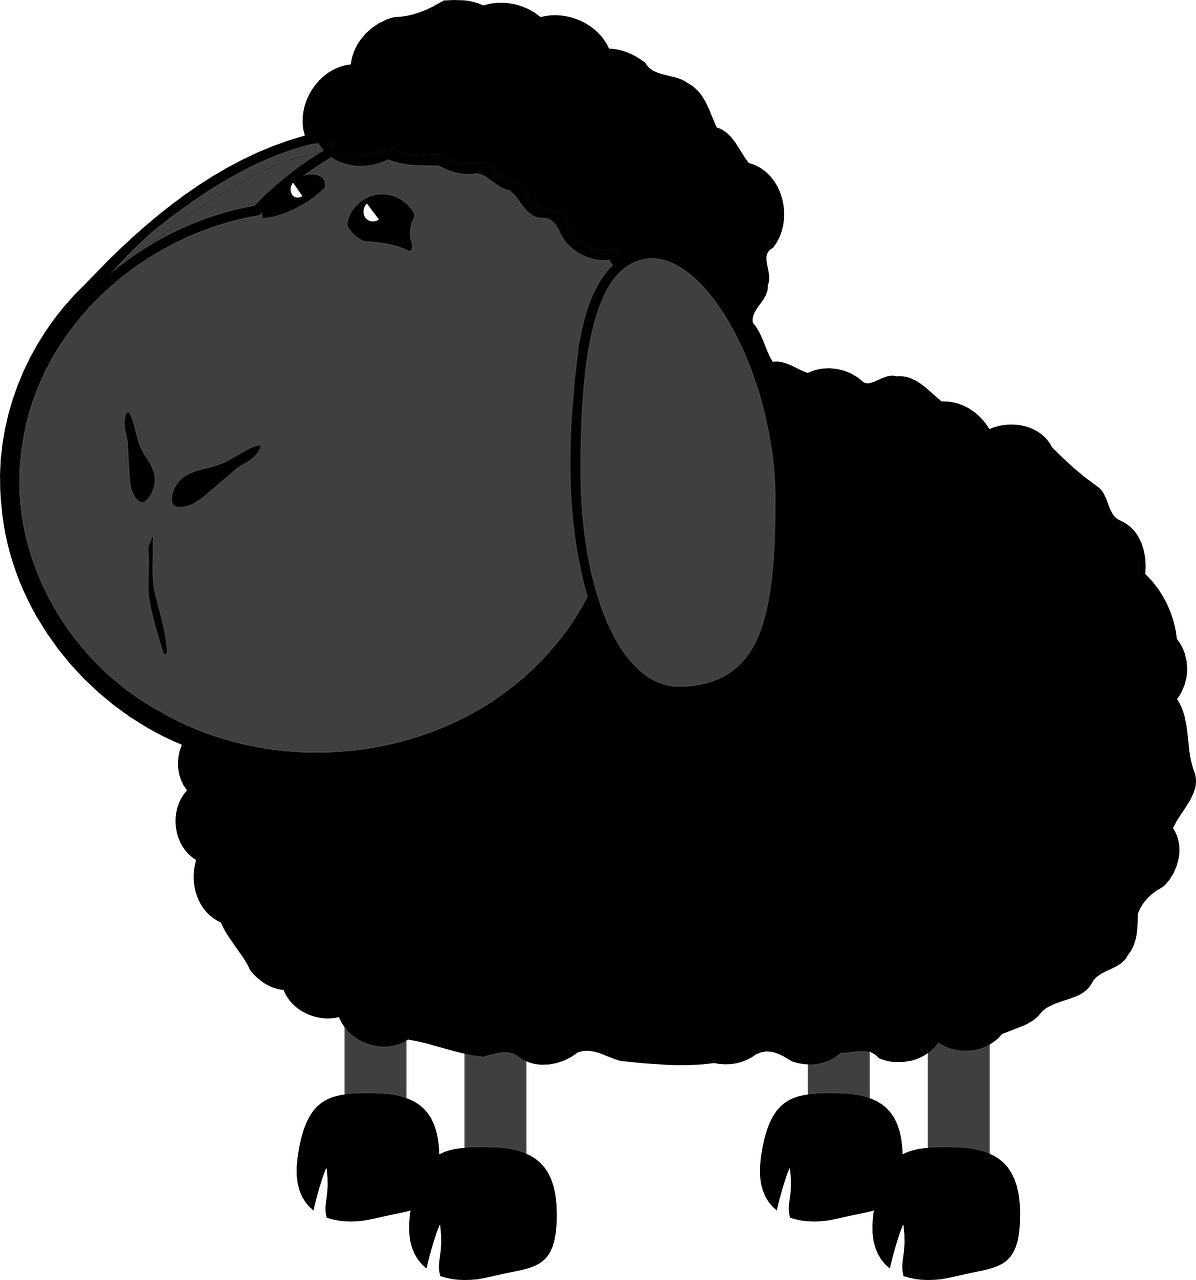 a black and white image of a tennis ball, inspired by Anato Finnstark, deviantart, ascii art, ( dog ) looks like elephant, looks sad and solemn, black backround. inkscape, ram sheep robot